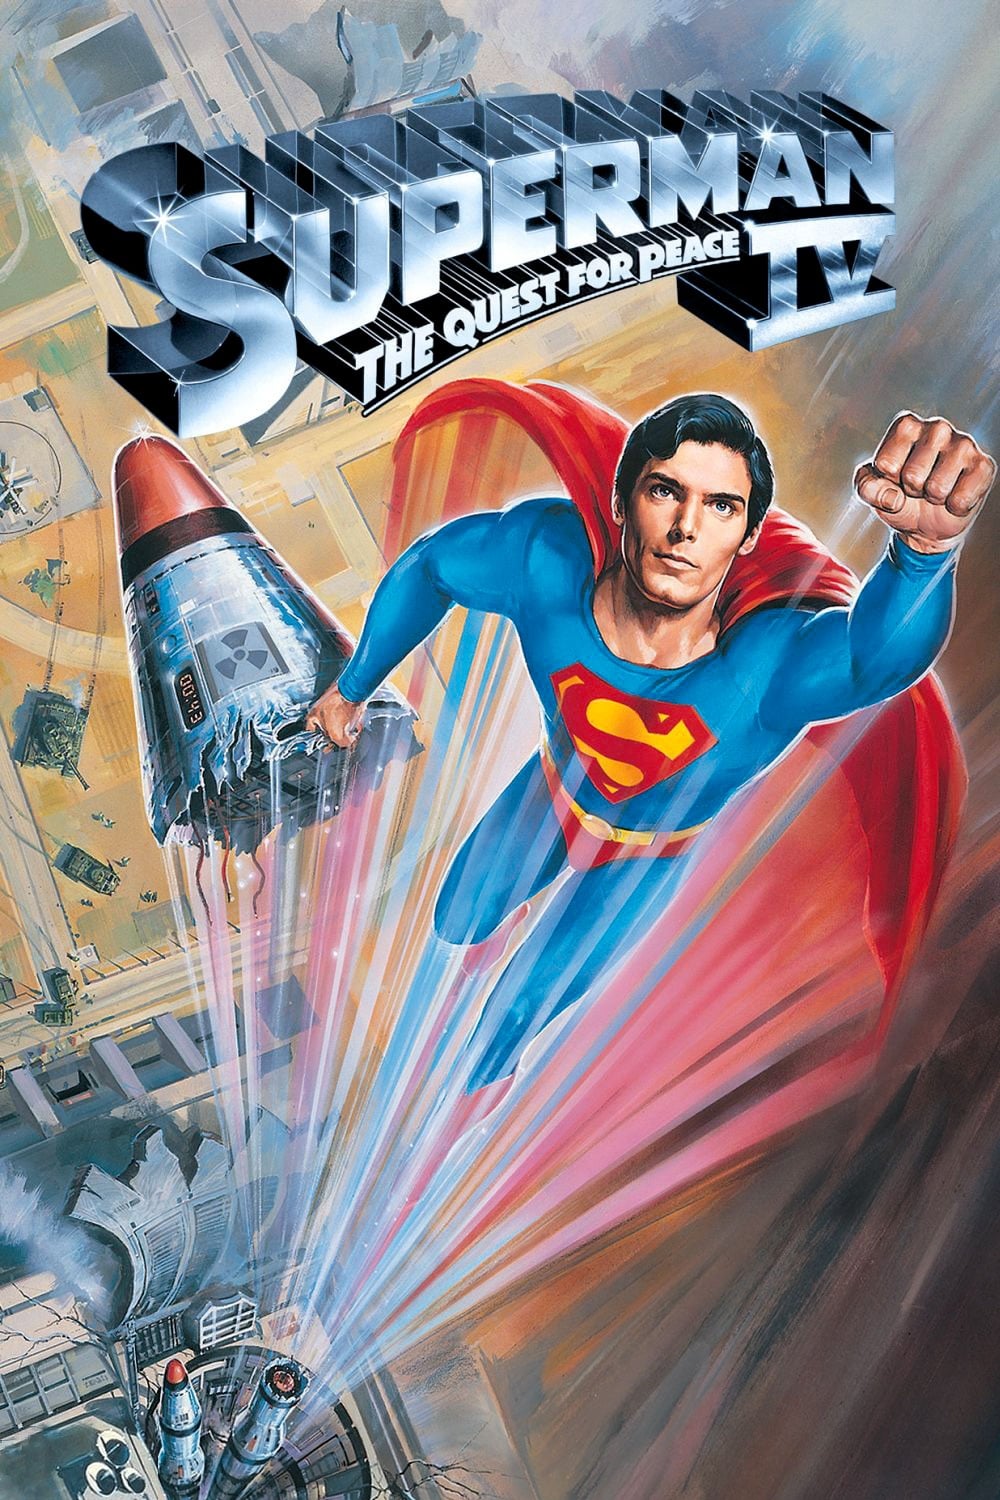 Superman IV: En busca de la paz (1987)